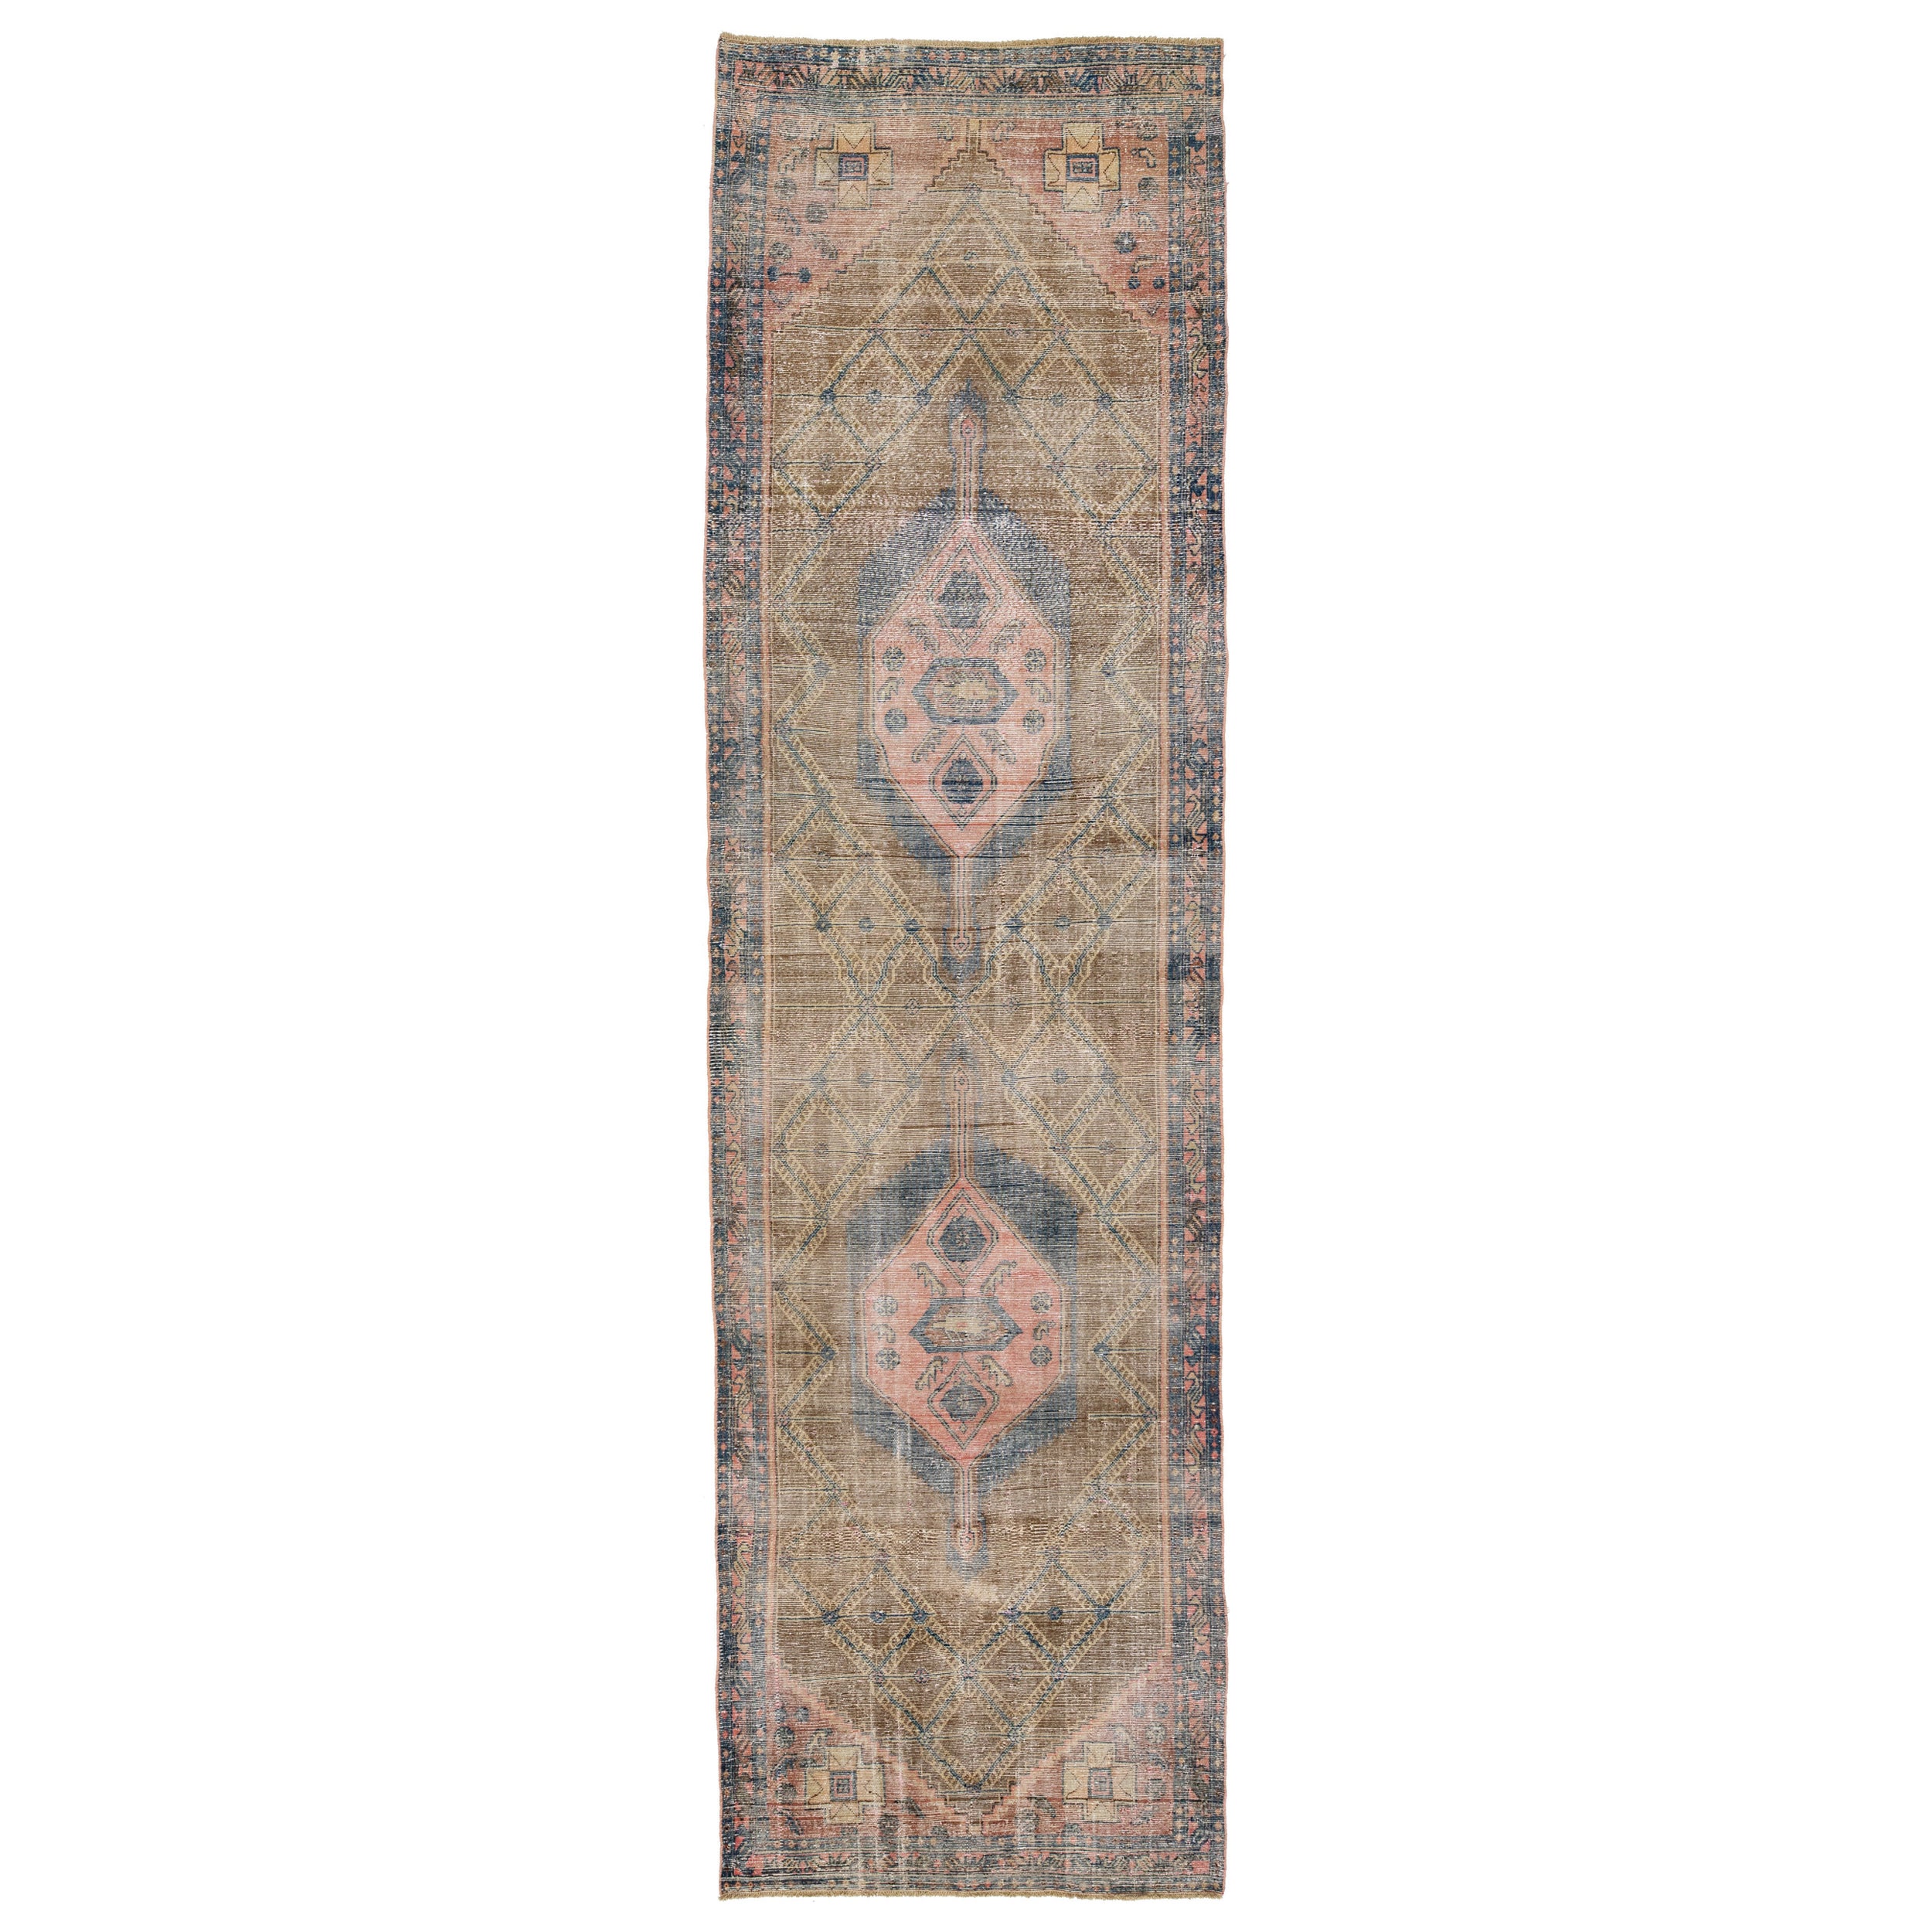 4 x 15 Vintage Distressed Persian Wool Runner In Brown mit Tribal-Motiv im Angebot